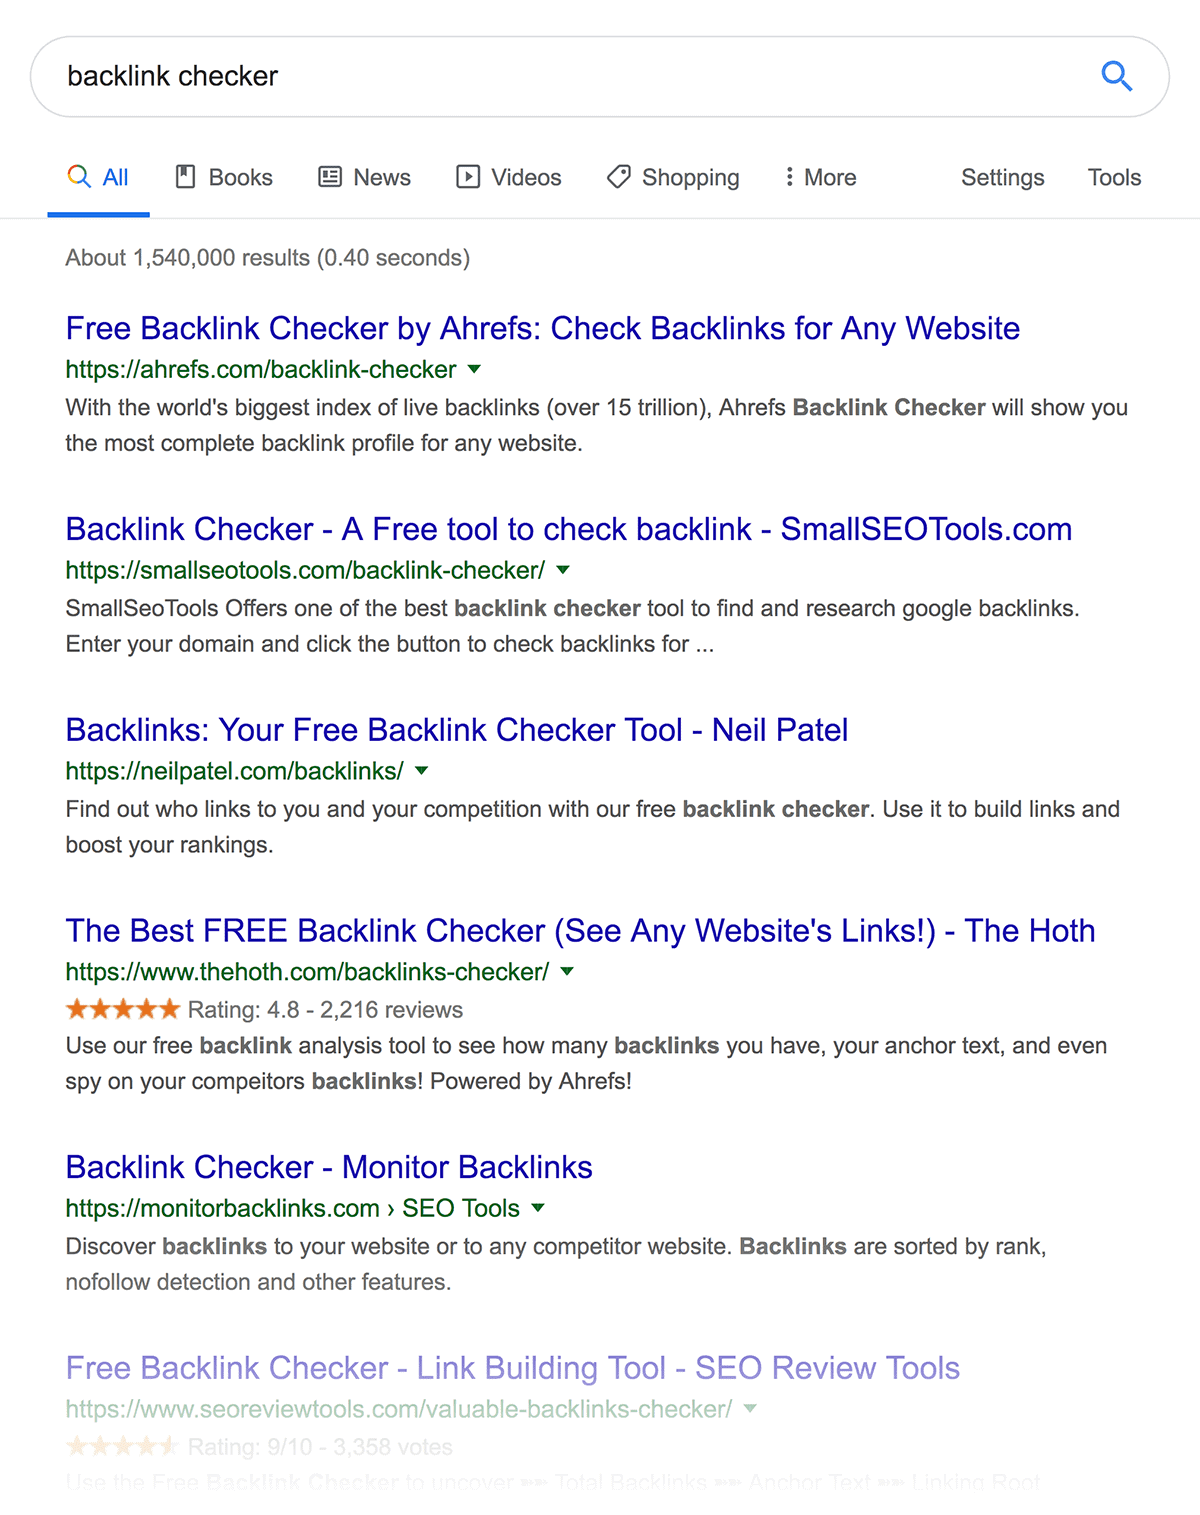 "backlink checker" search results